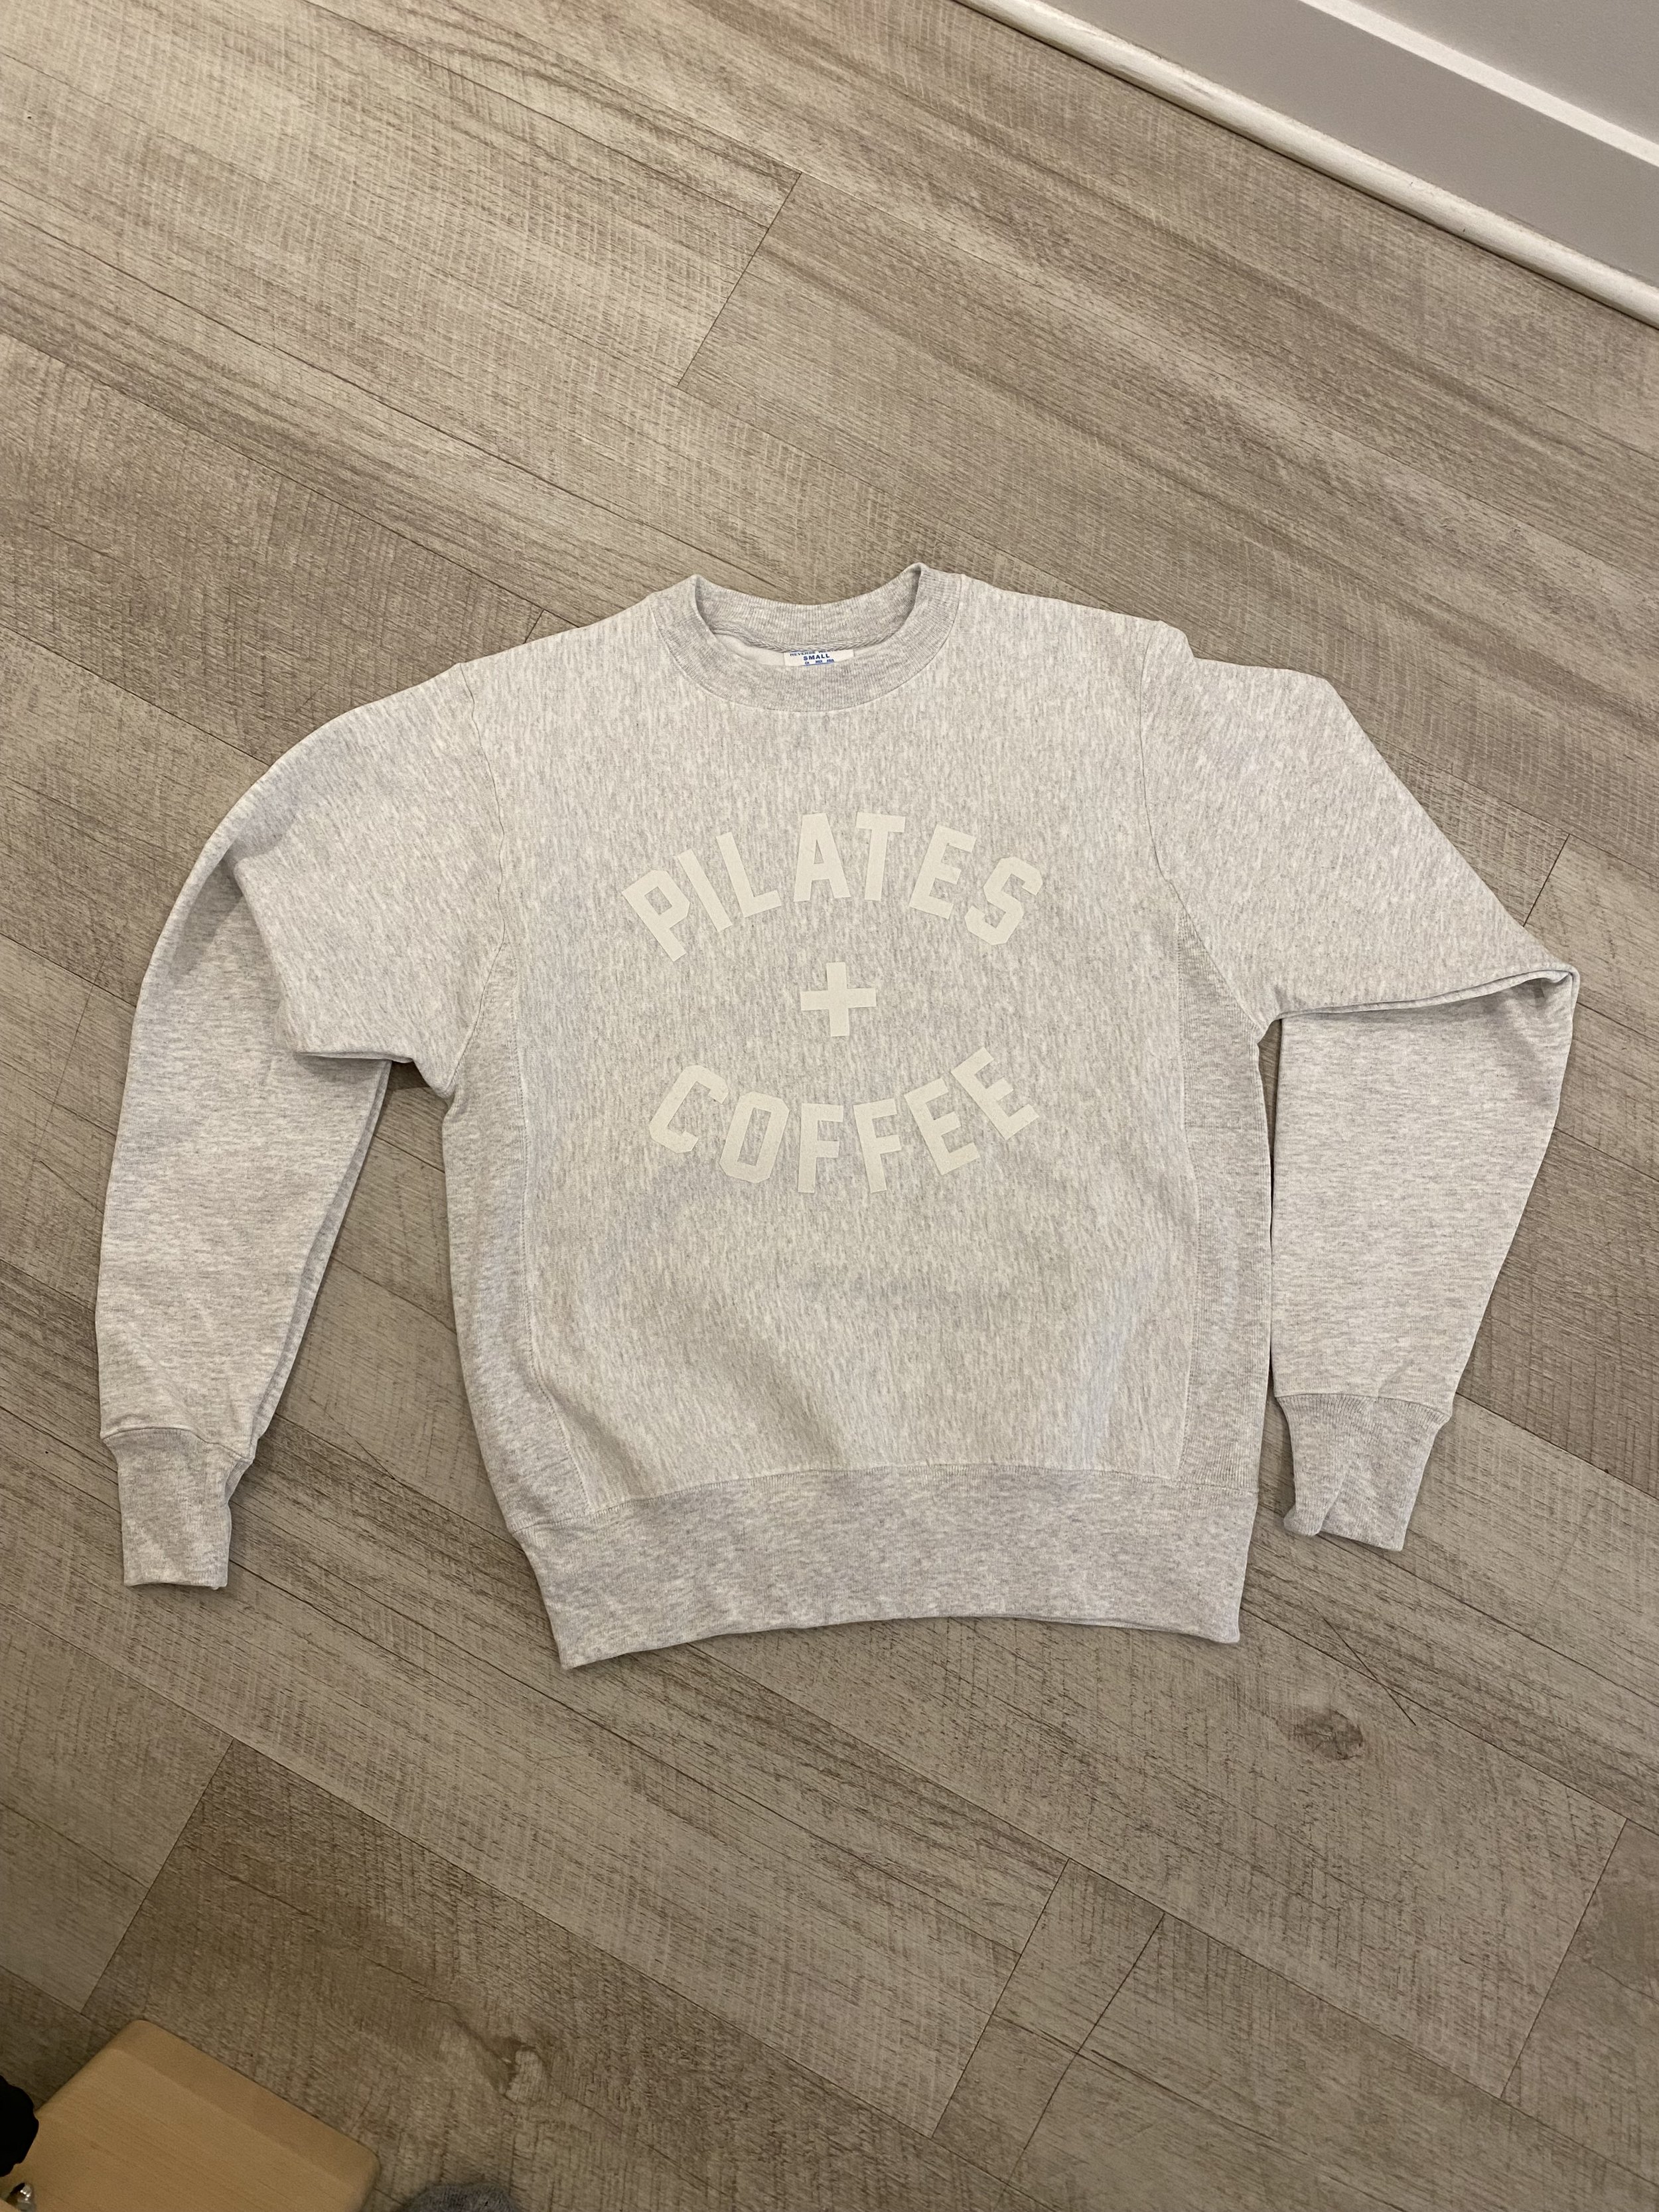 STORE — Pilates + Coffee